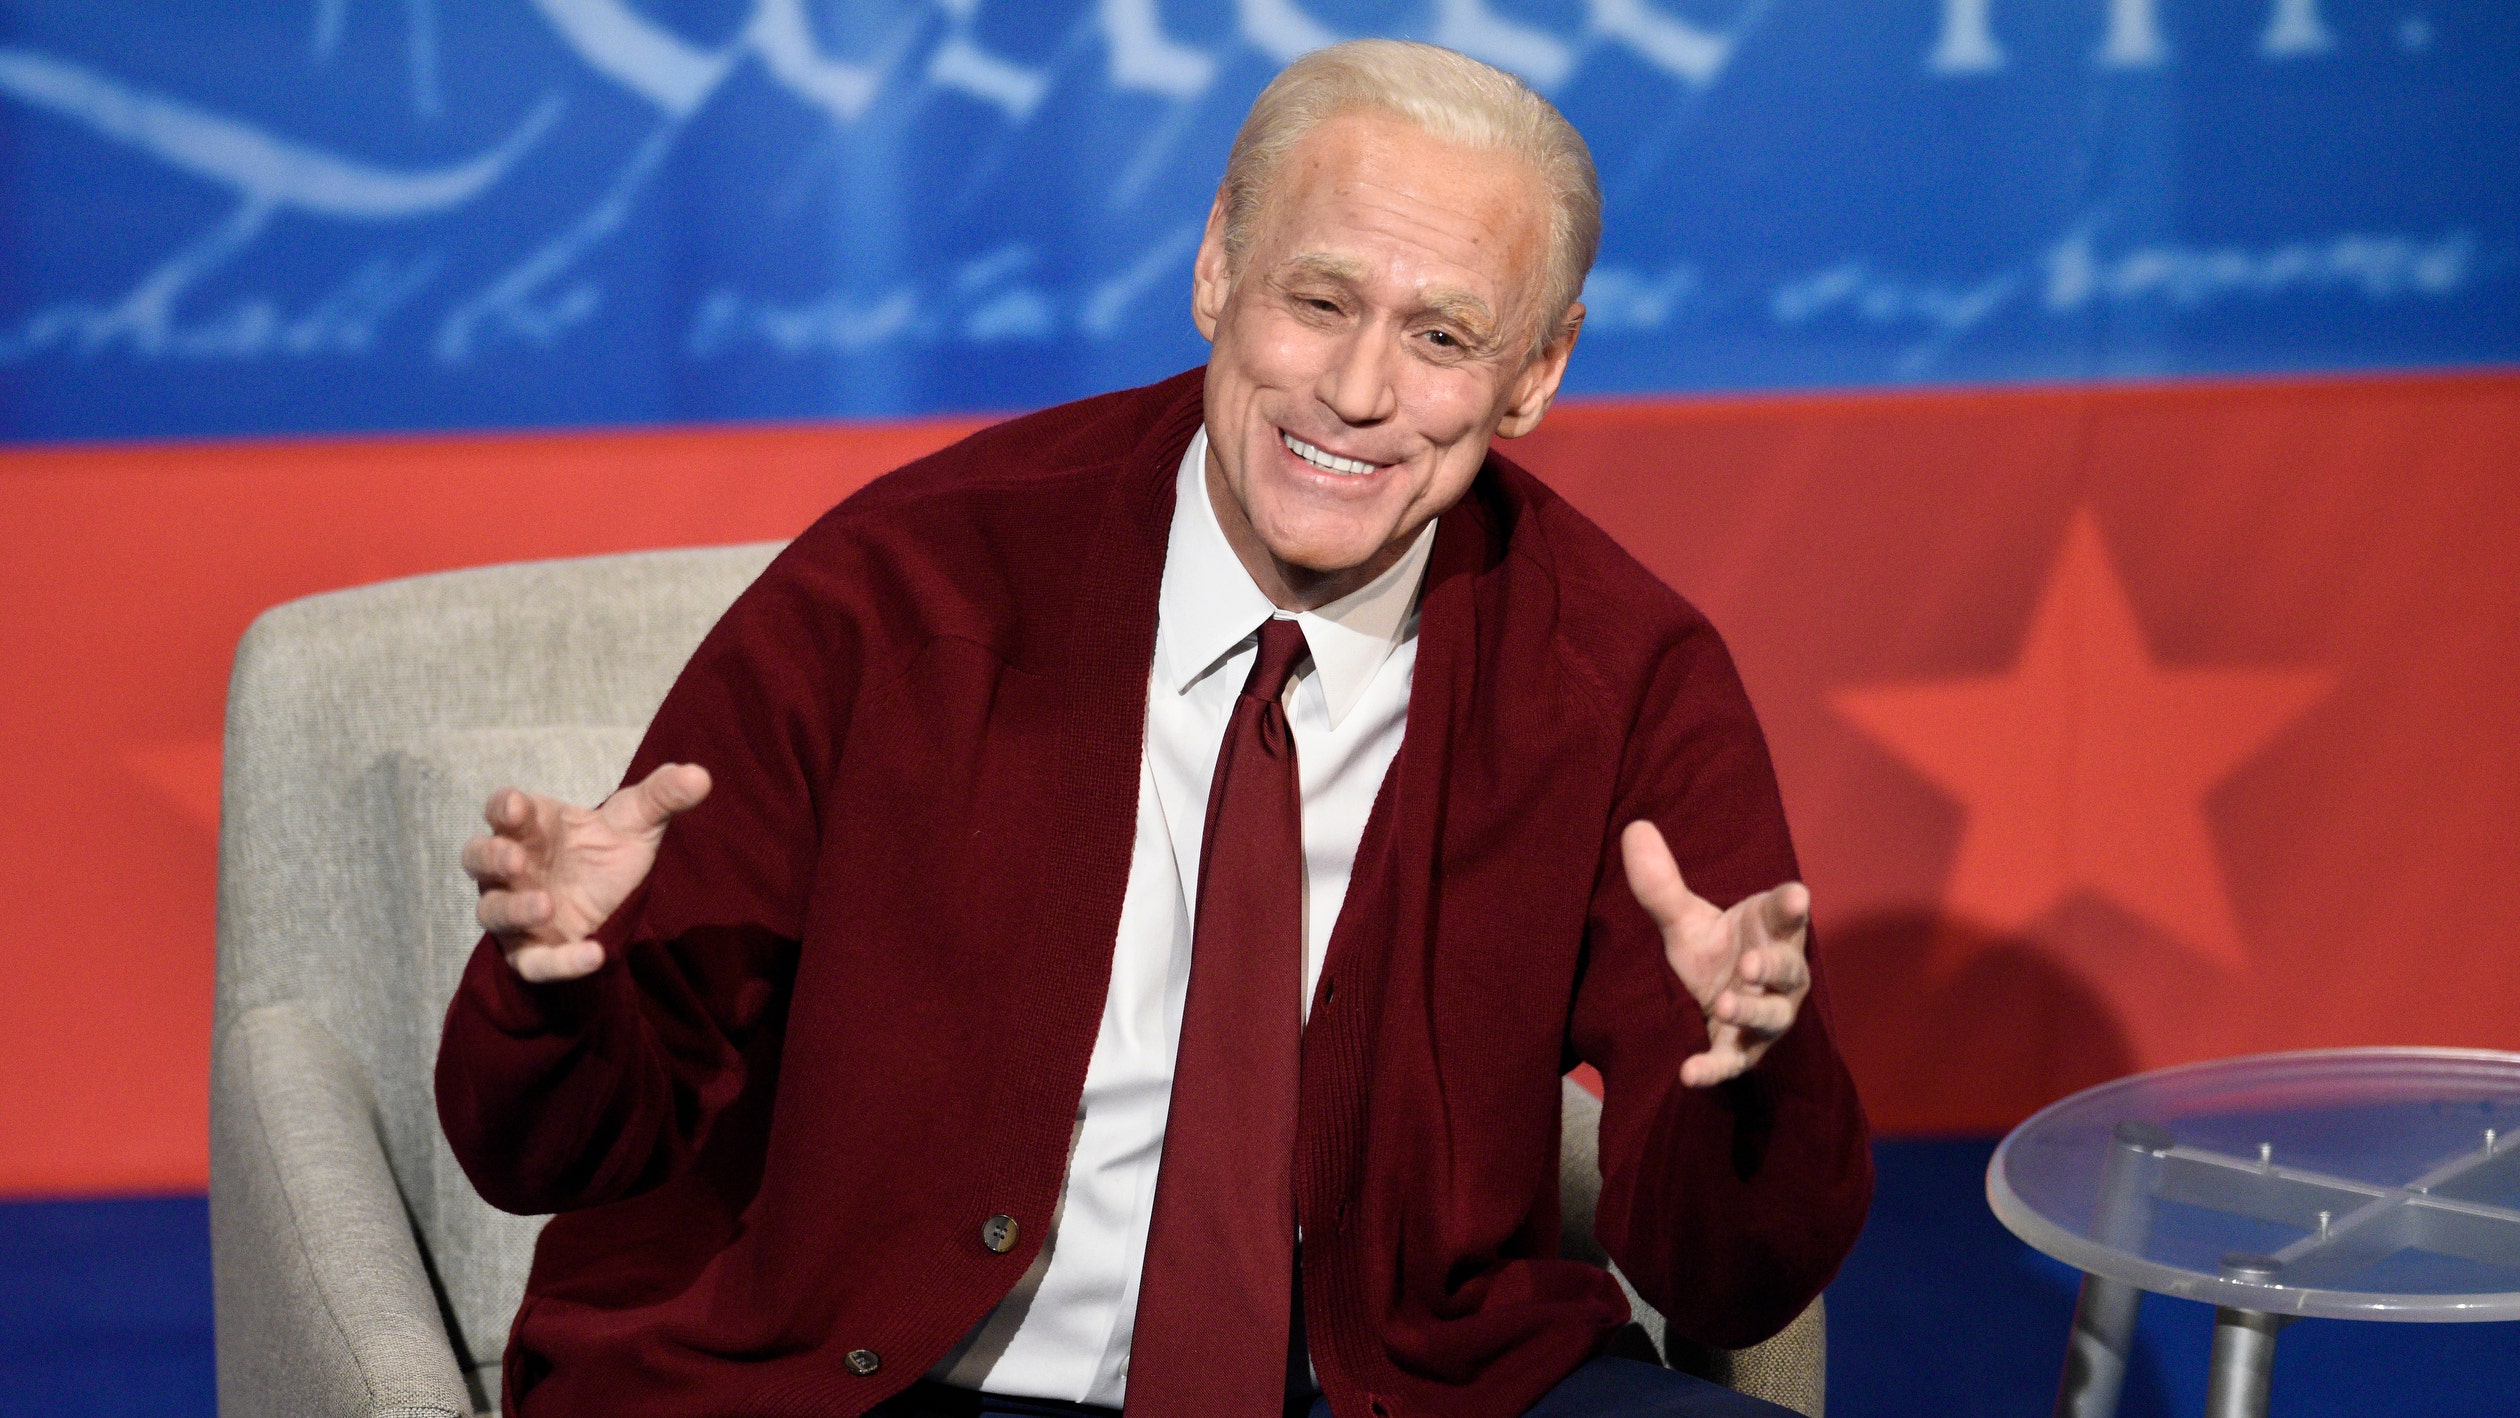 Jim Carrey spoofs Joe Biden town hall with Mr. Rogers comparison on 'SNL' - Fox News